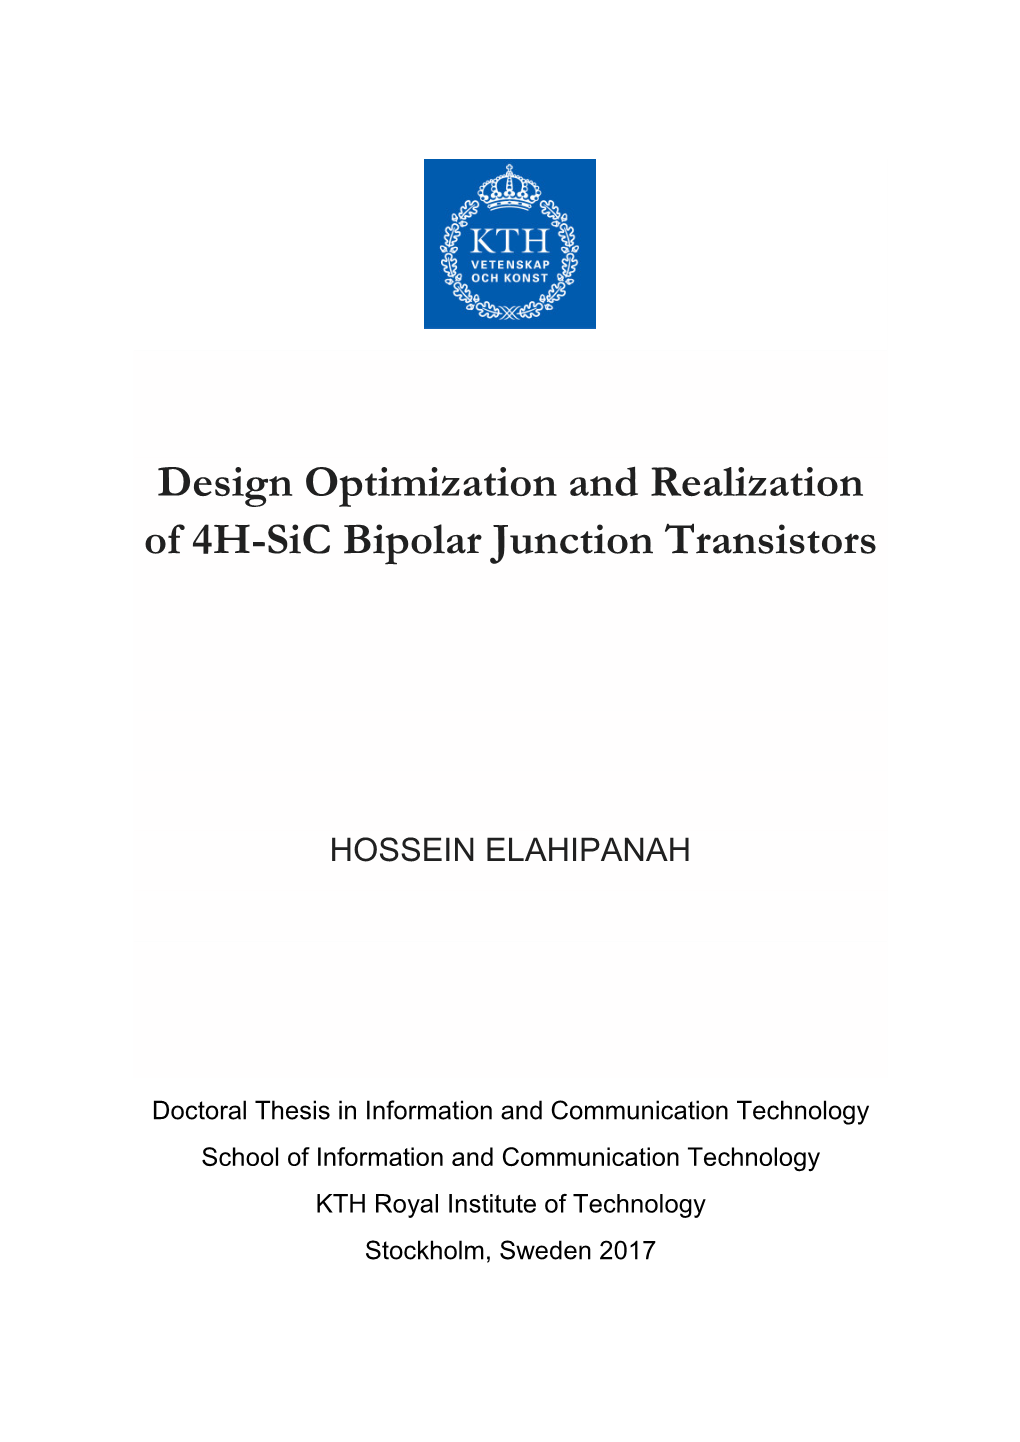 Design Optimization and Realization of 4H-Sic Bipolar Junction Transistors